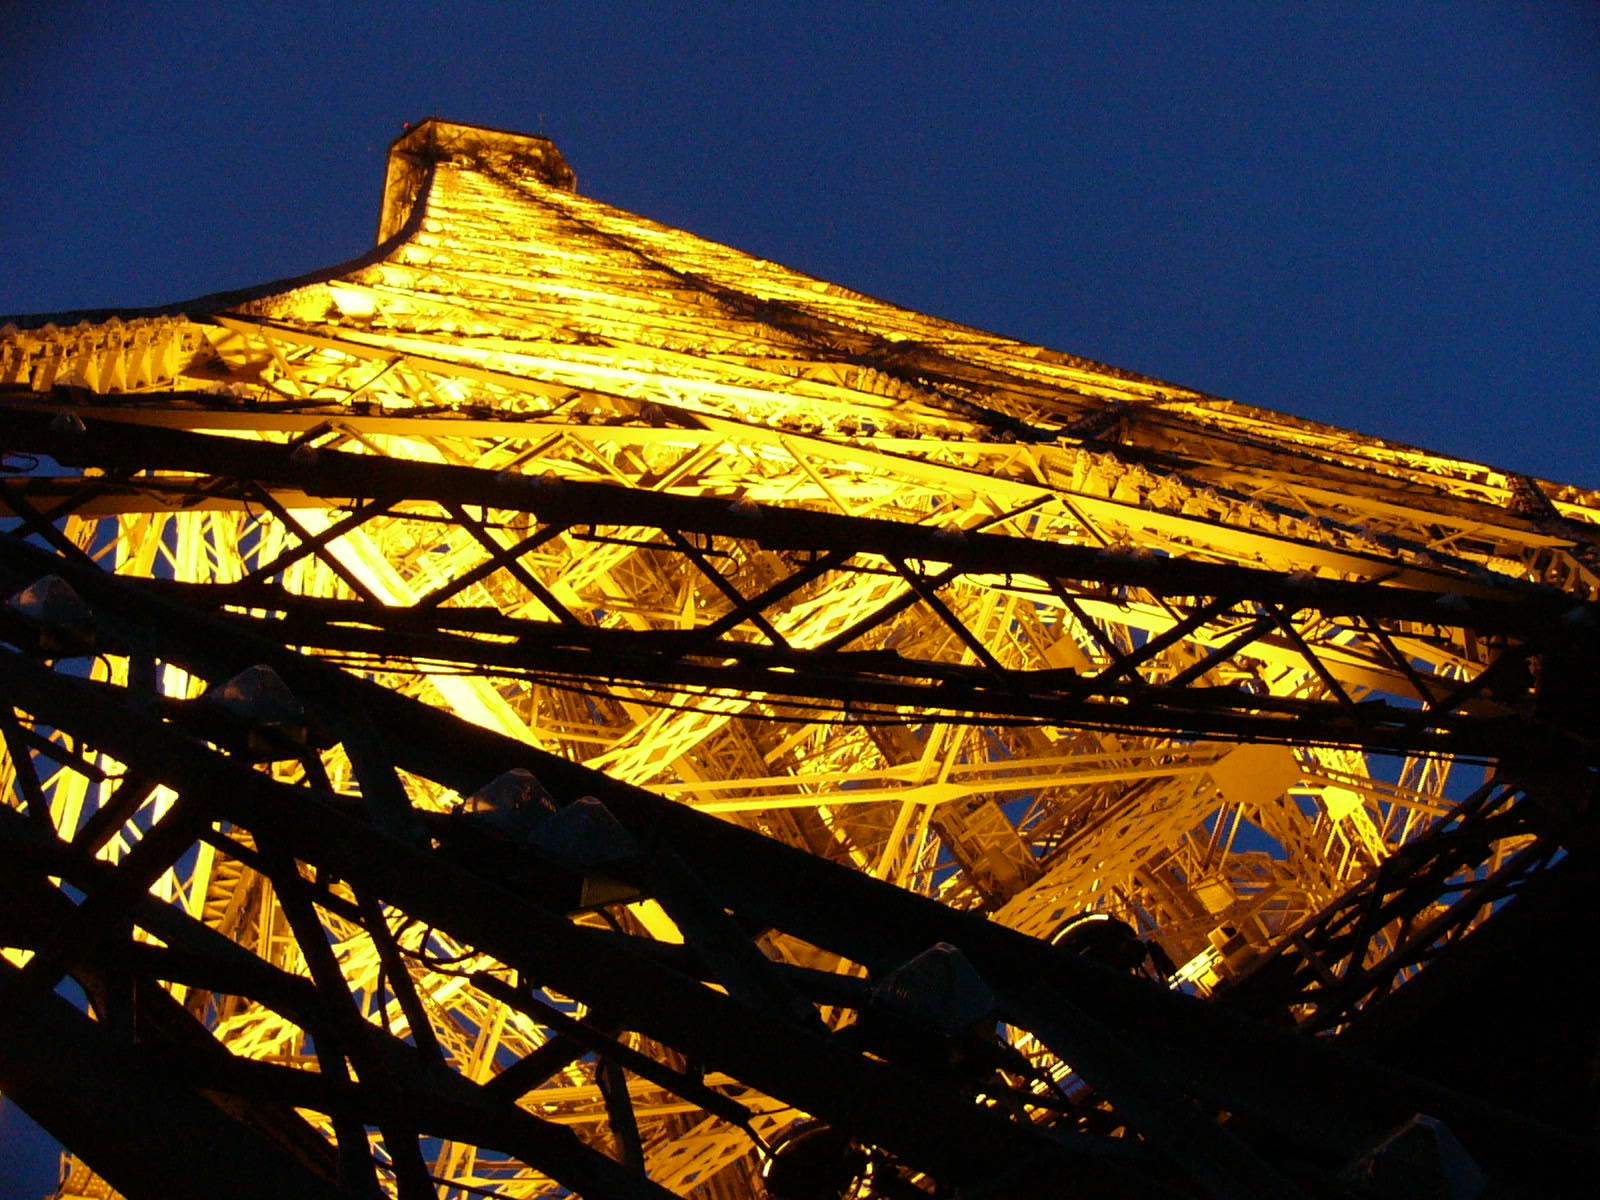 p1060528.jpg - Eiffel Tower